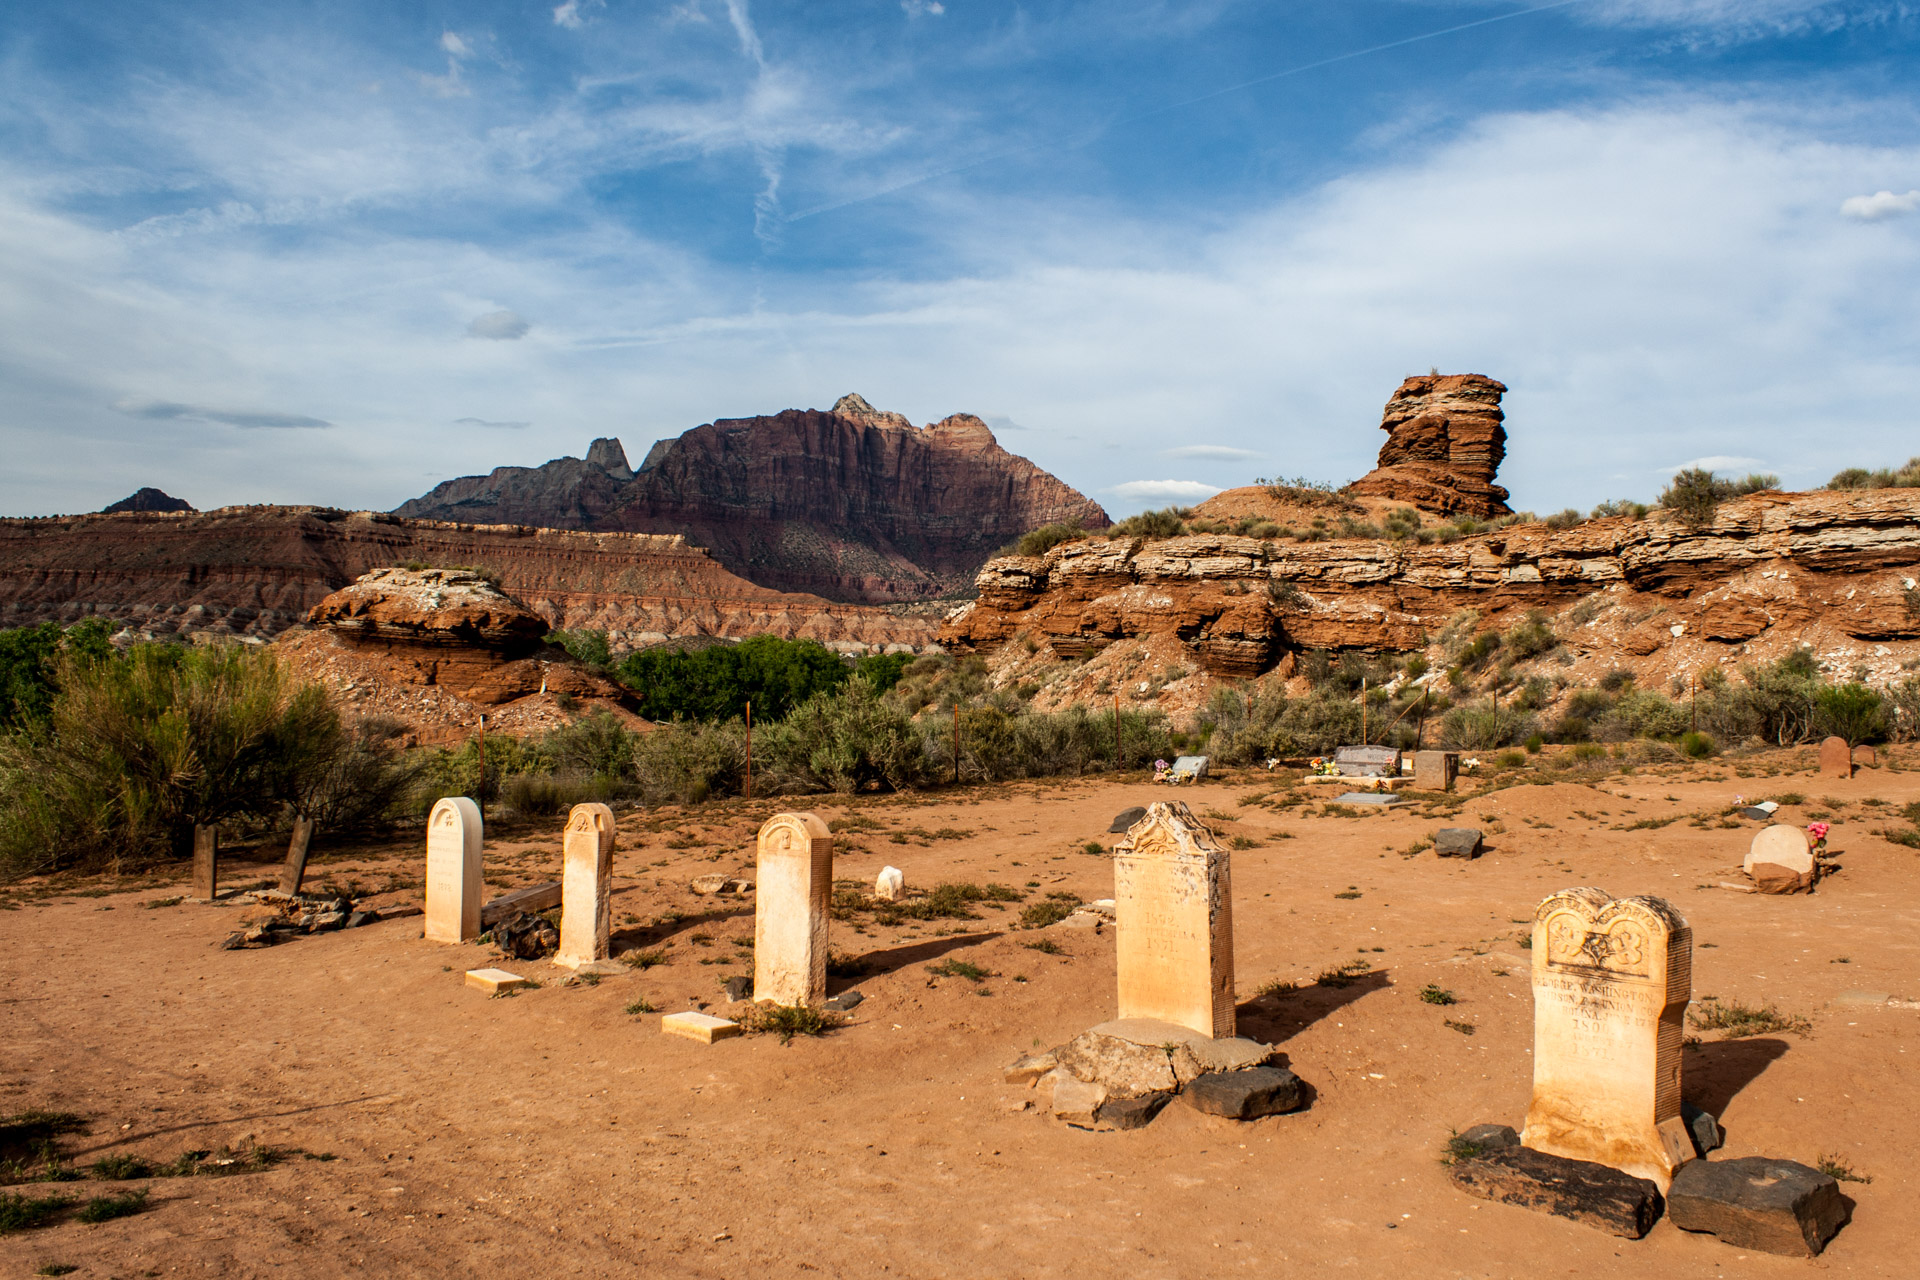 A Desert Ghost Town Cemetery (left close)